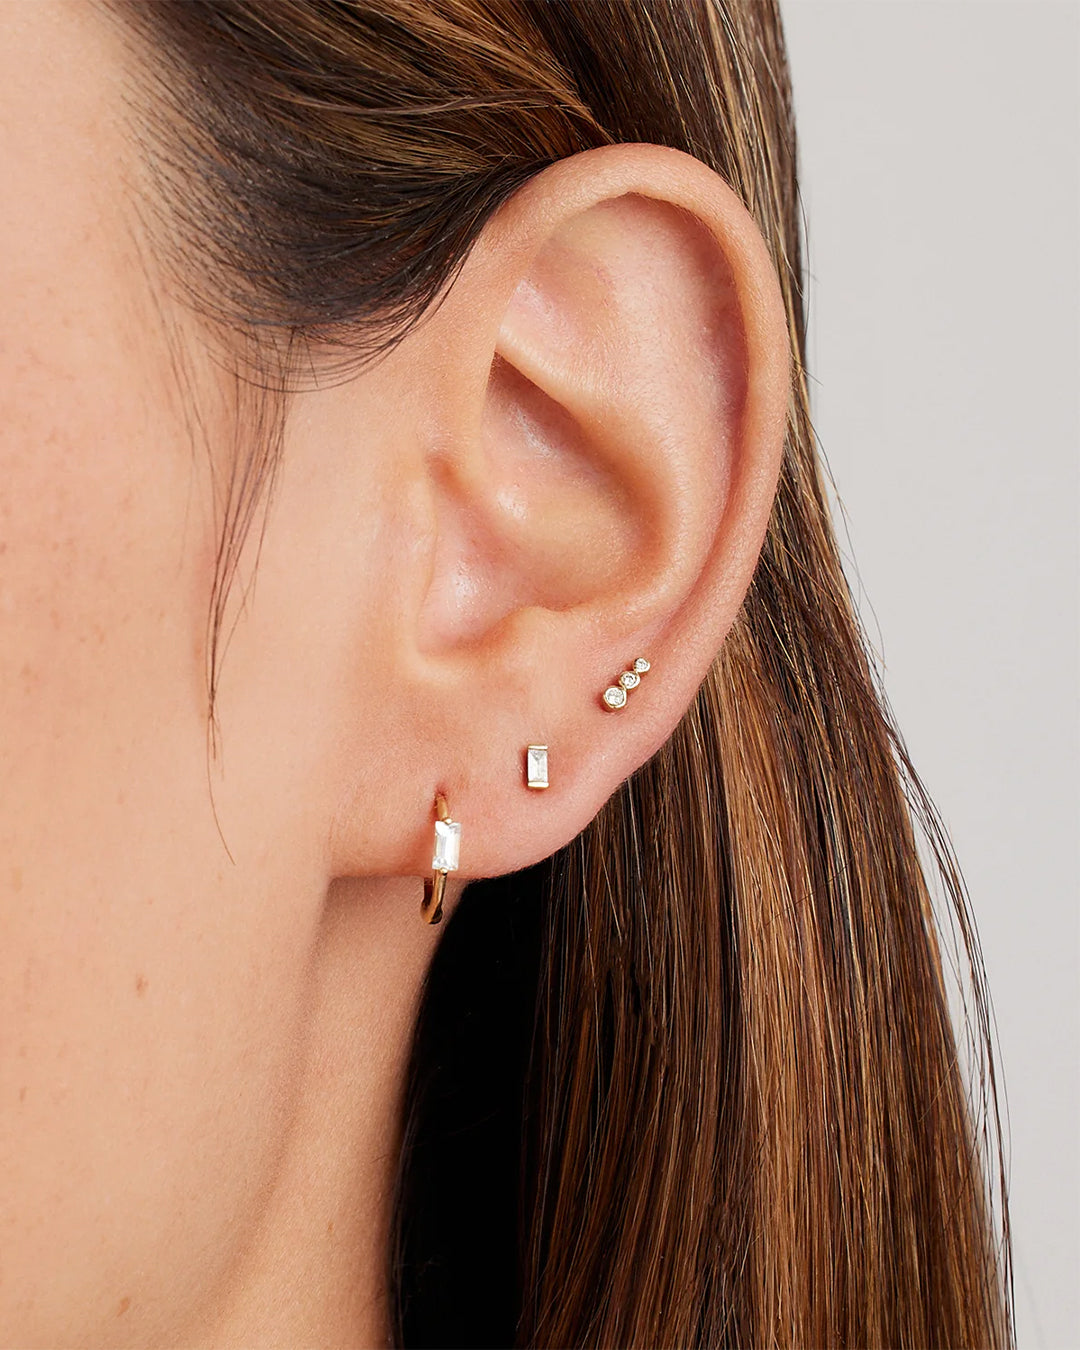 Diamond Pavé Bar Flat Back Studs Earring in 14K Solid Gold/Pair, Women's by Gorjana